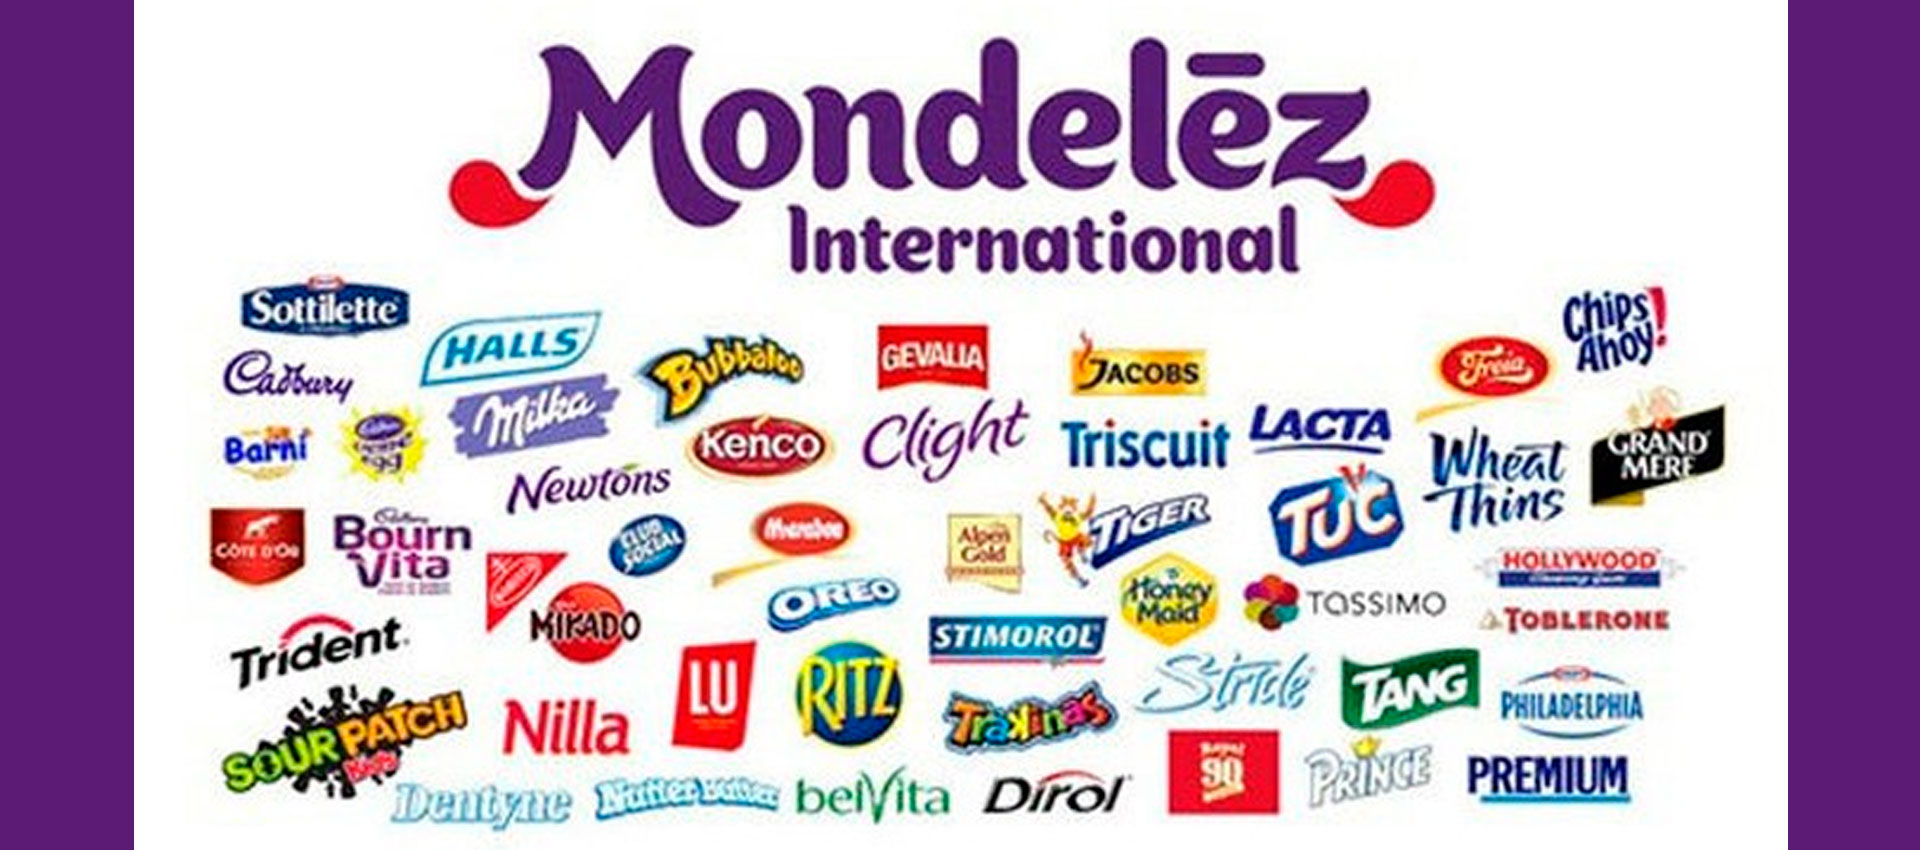 Mondelez International Products in Pakistan – Online Availability in Pakistan